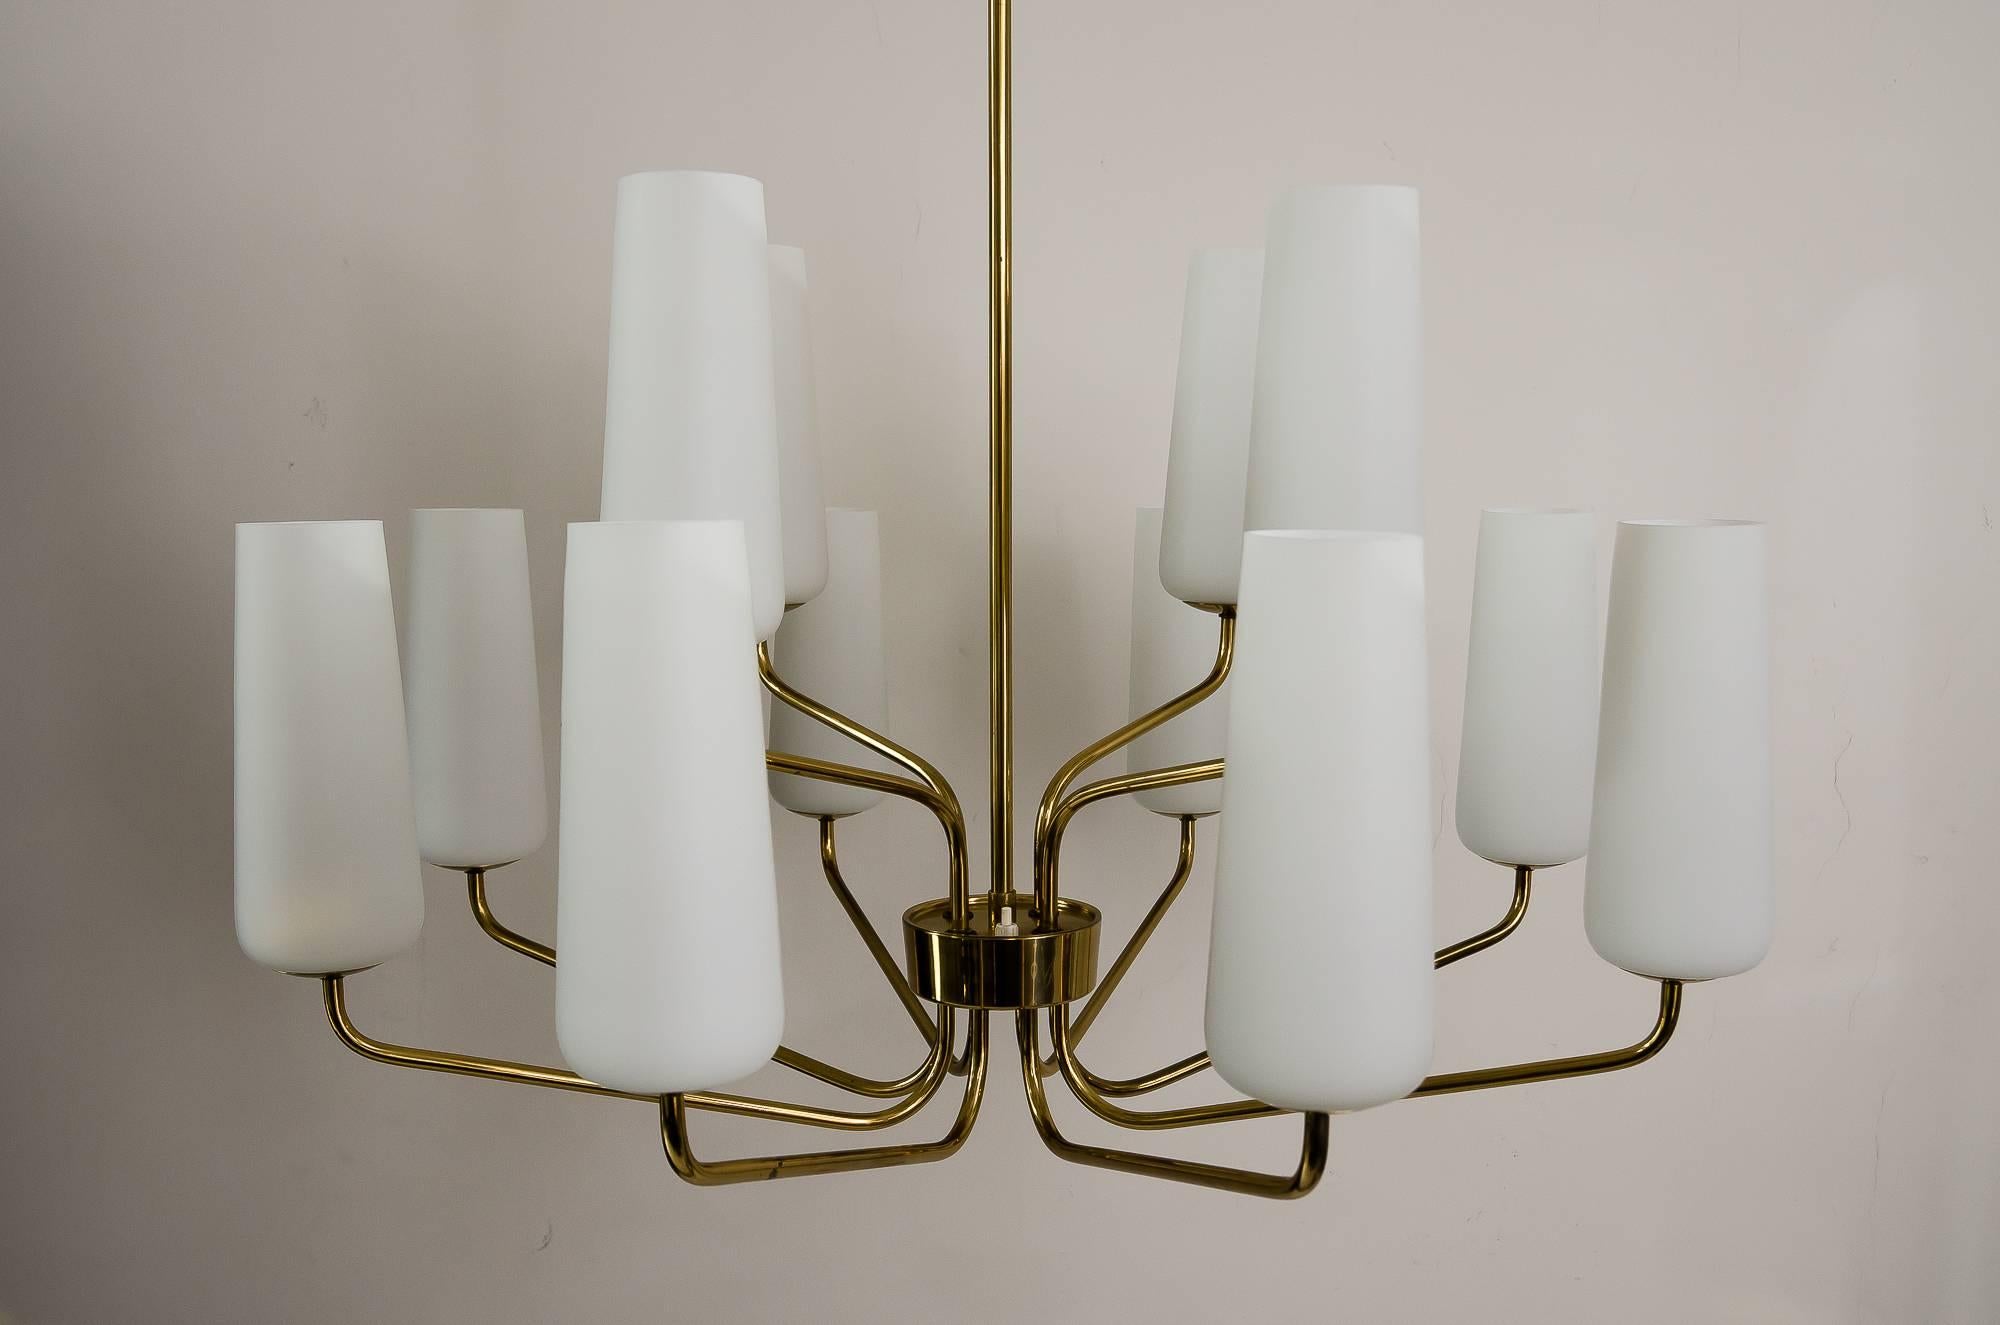 Beautiful big twelve-light Italian brass chandeliers with double glass
Original condition.